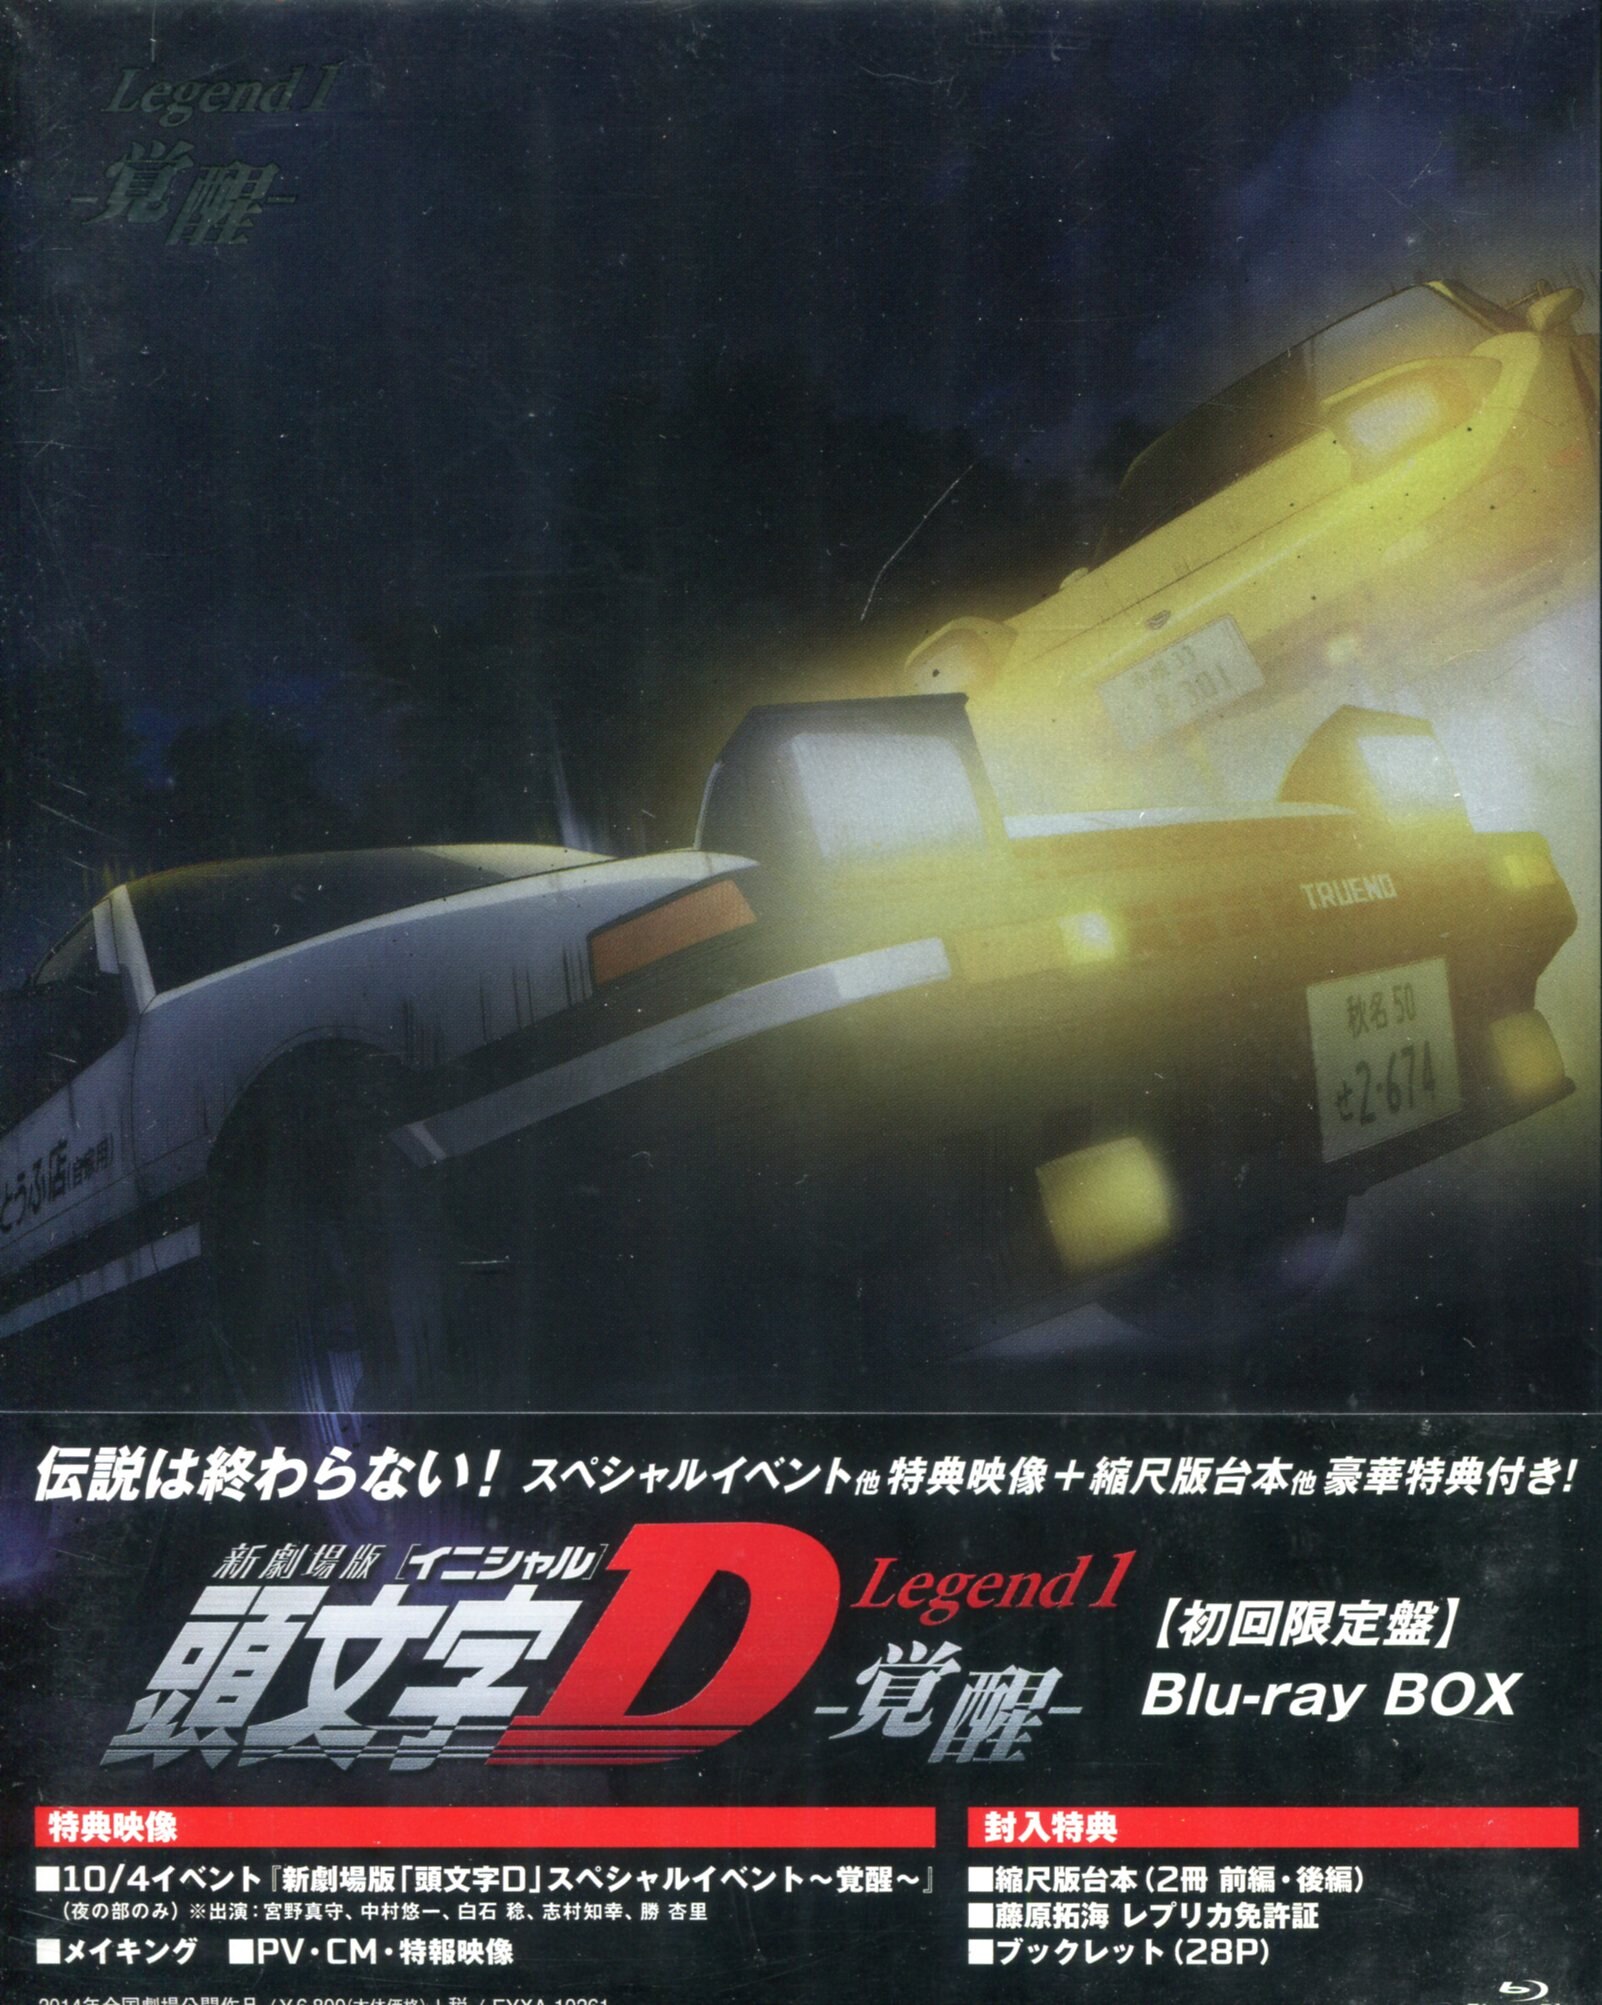 Anime Blu Ray First Edition Limited Ed Disc New Movie Version Initials D Legend1 Awakening Mandarake Online Shop